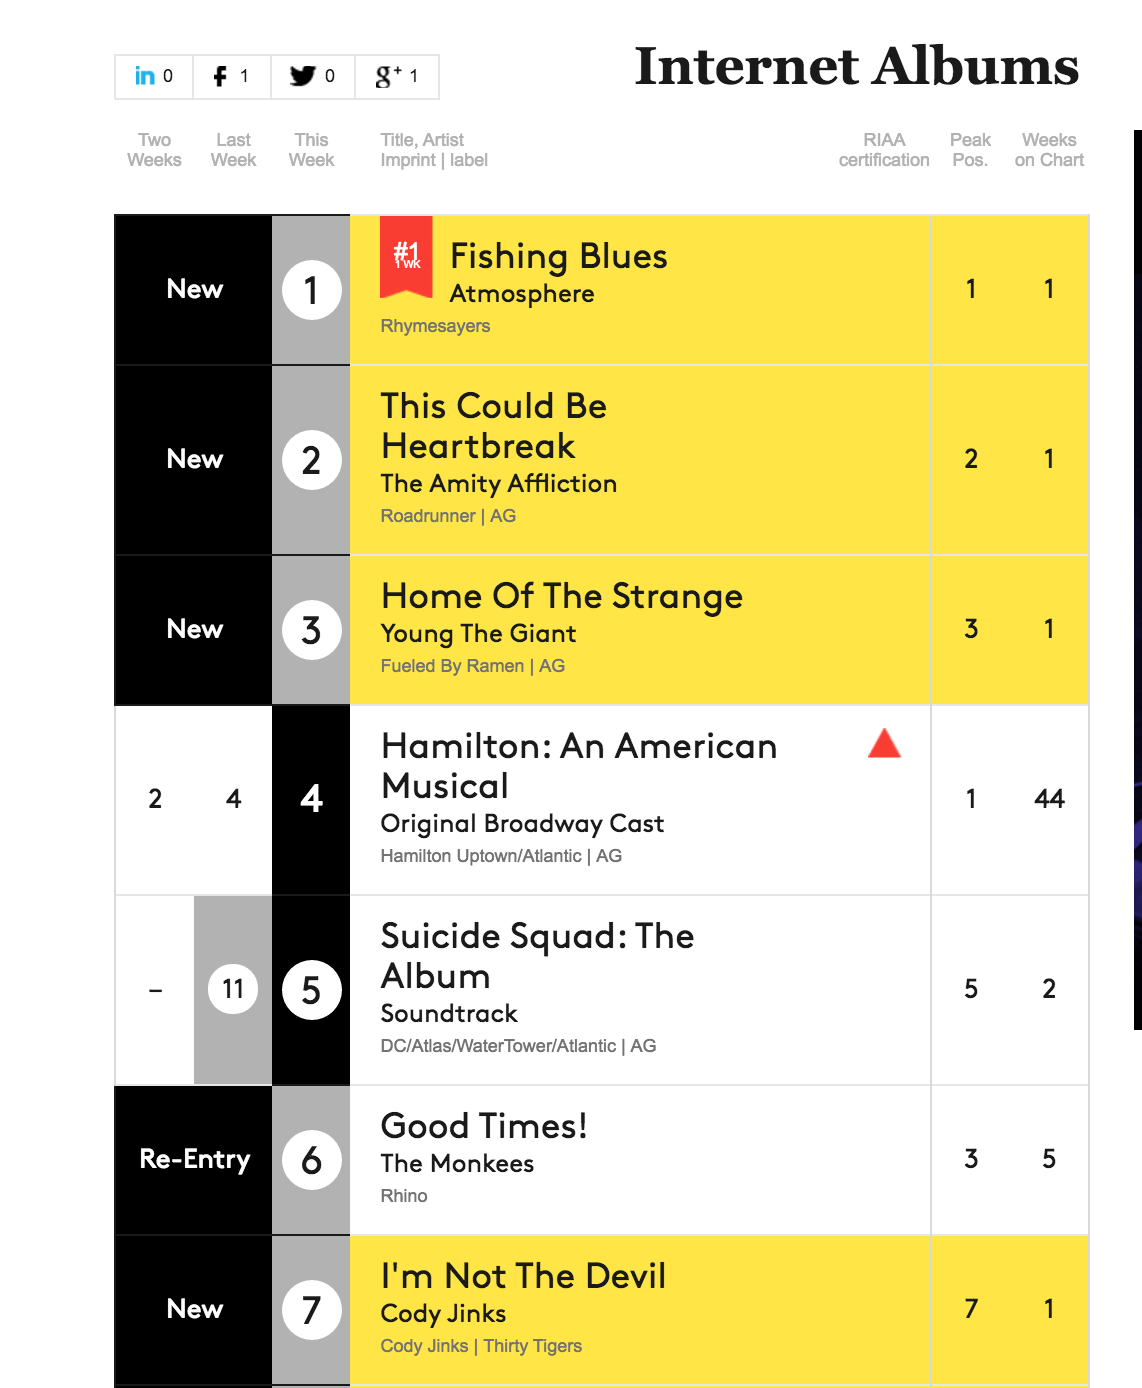 Billboard Independent Charts